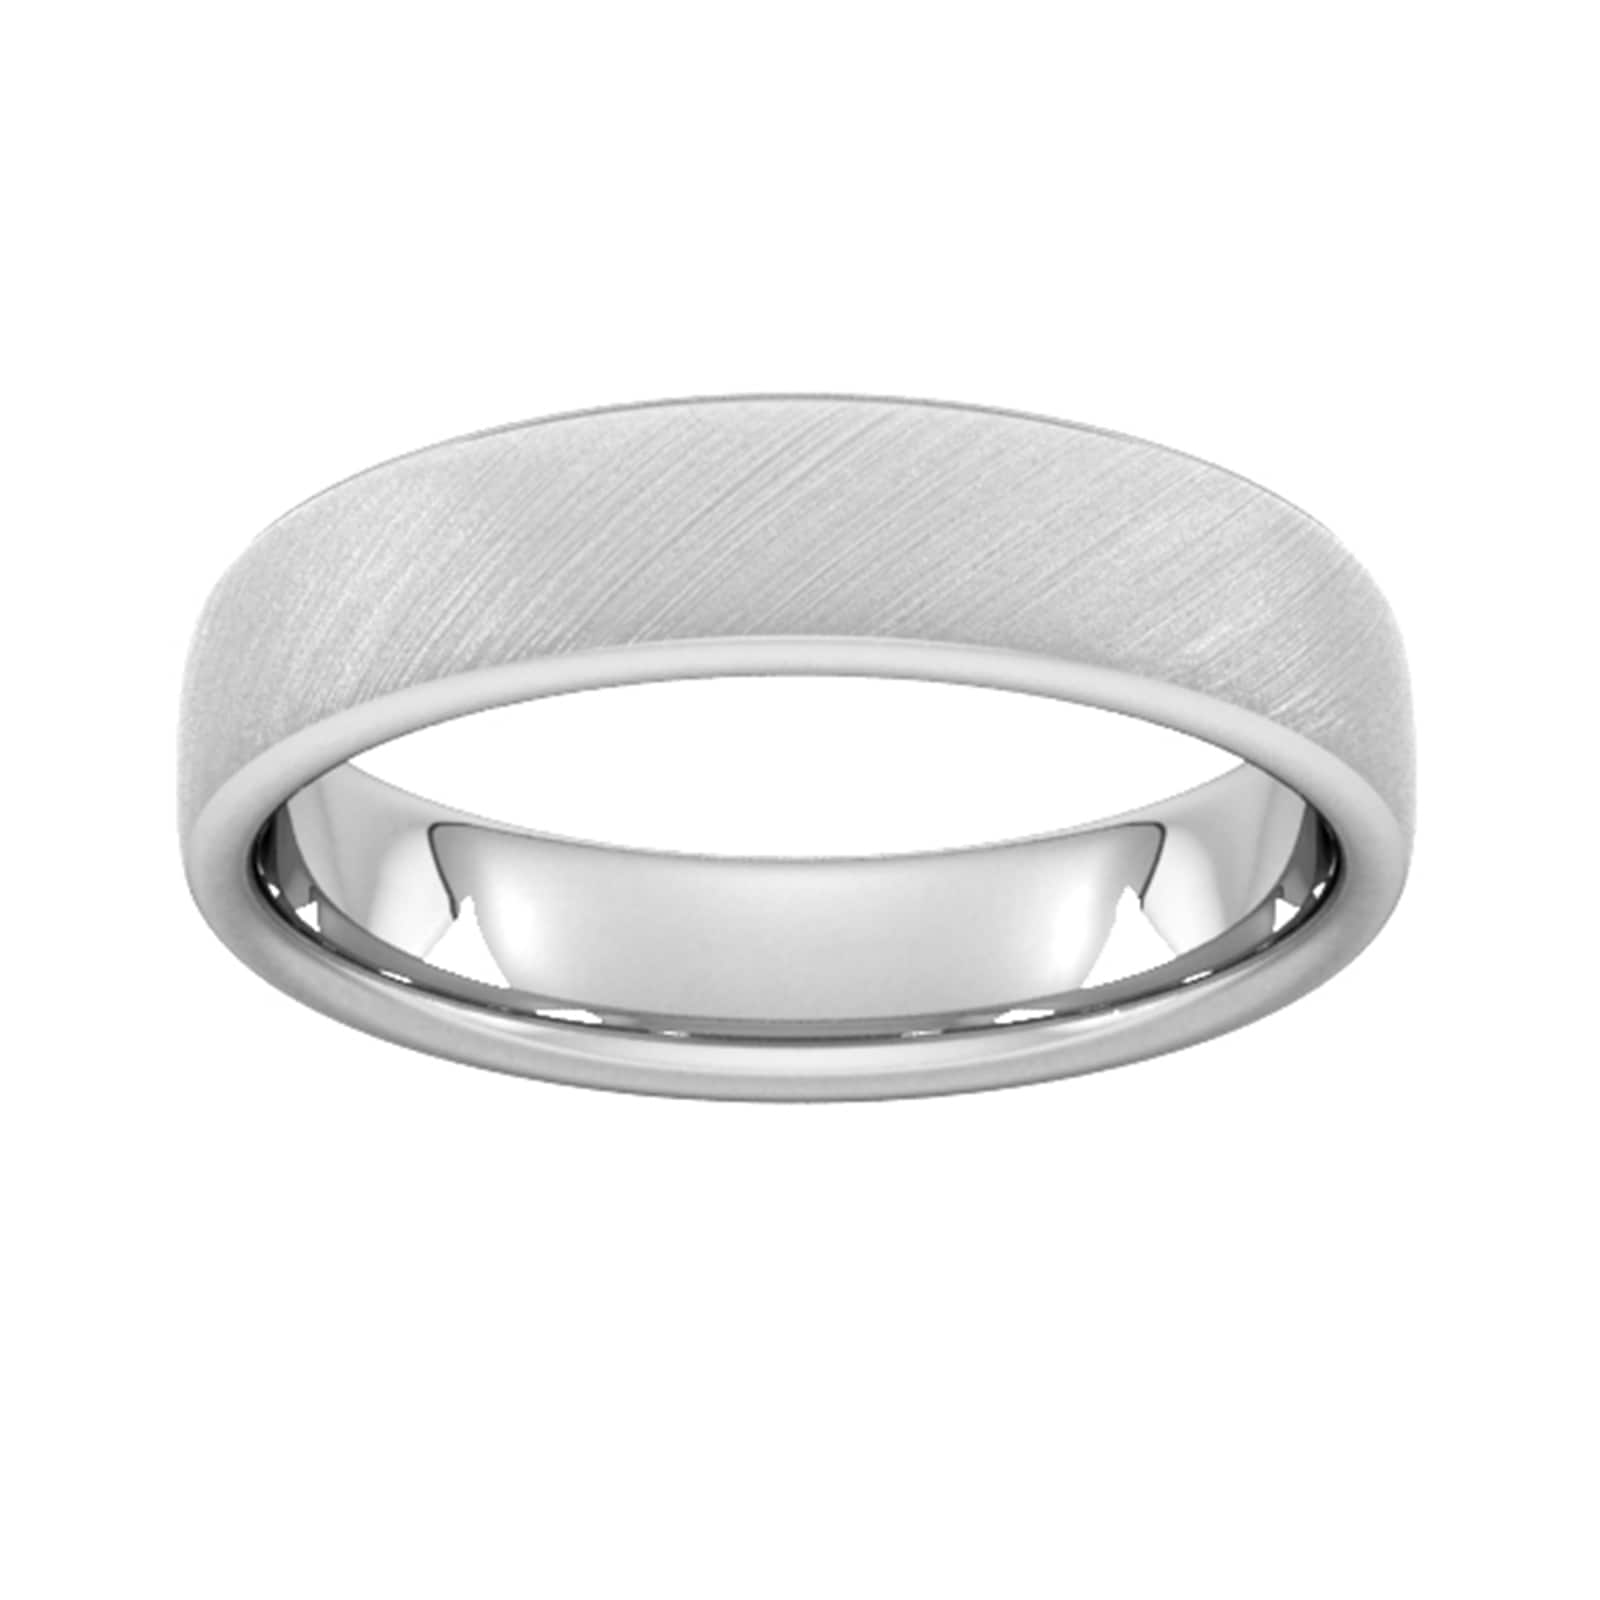 5mm Slight Court Heavy Diagonal Matt Finish Wedding Ring In 18 Carat White Gold - Ring Size O